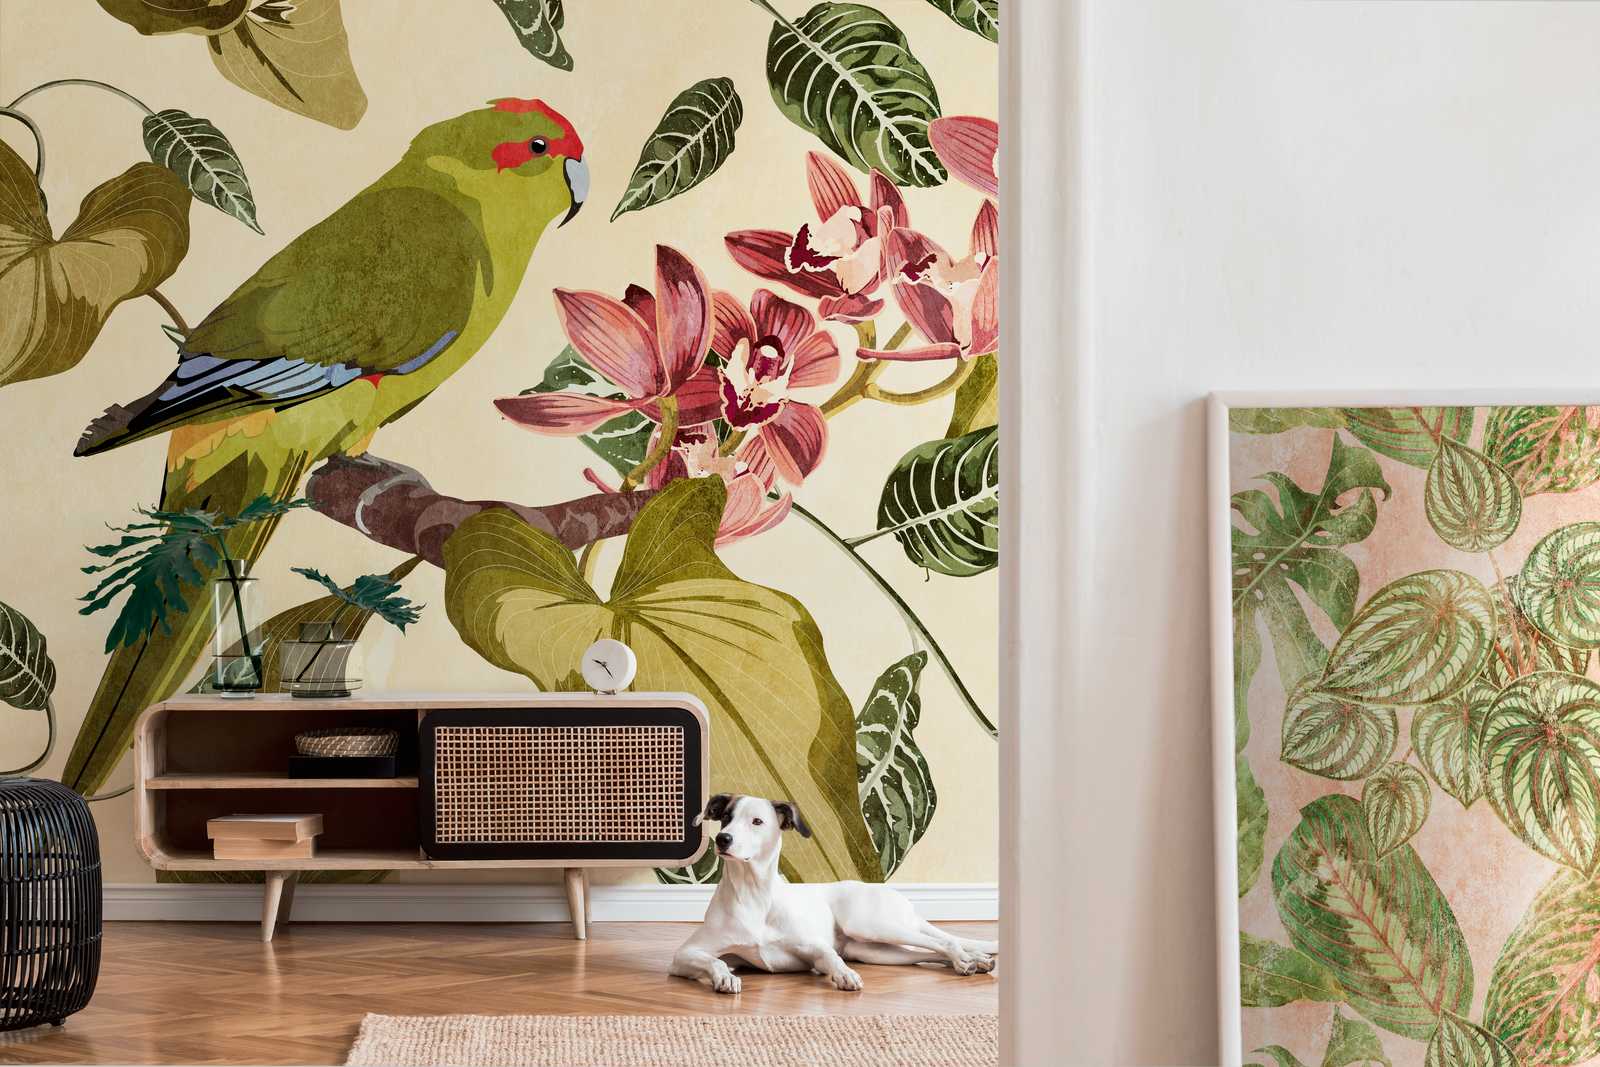             behang nieuwigheid - motief behang papegaai & orchideeën kunstdruk
        